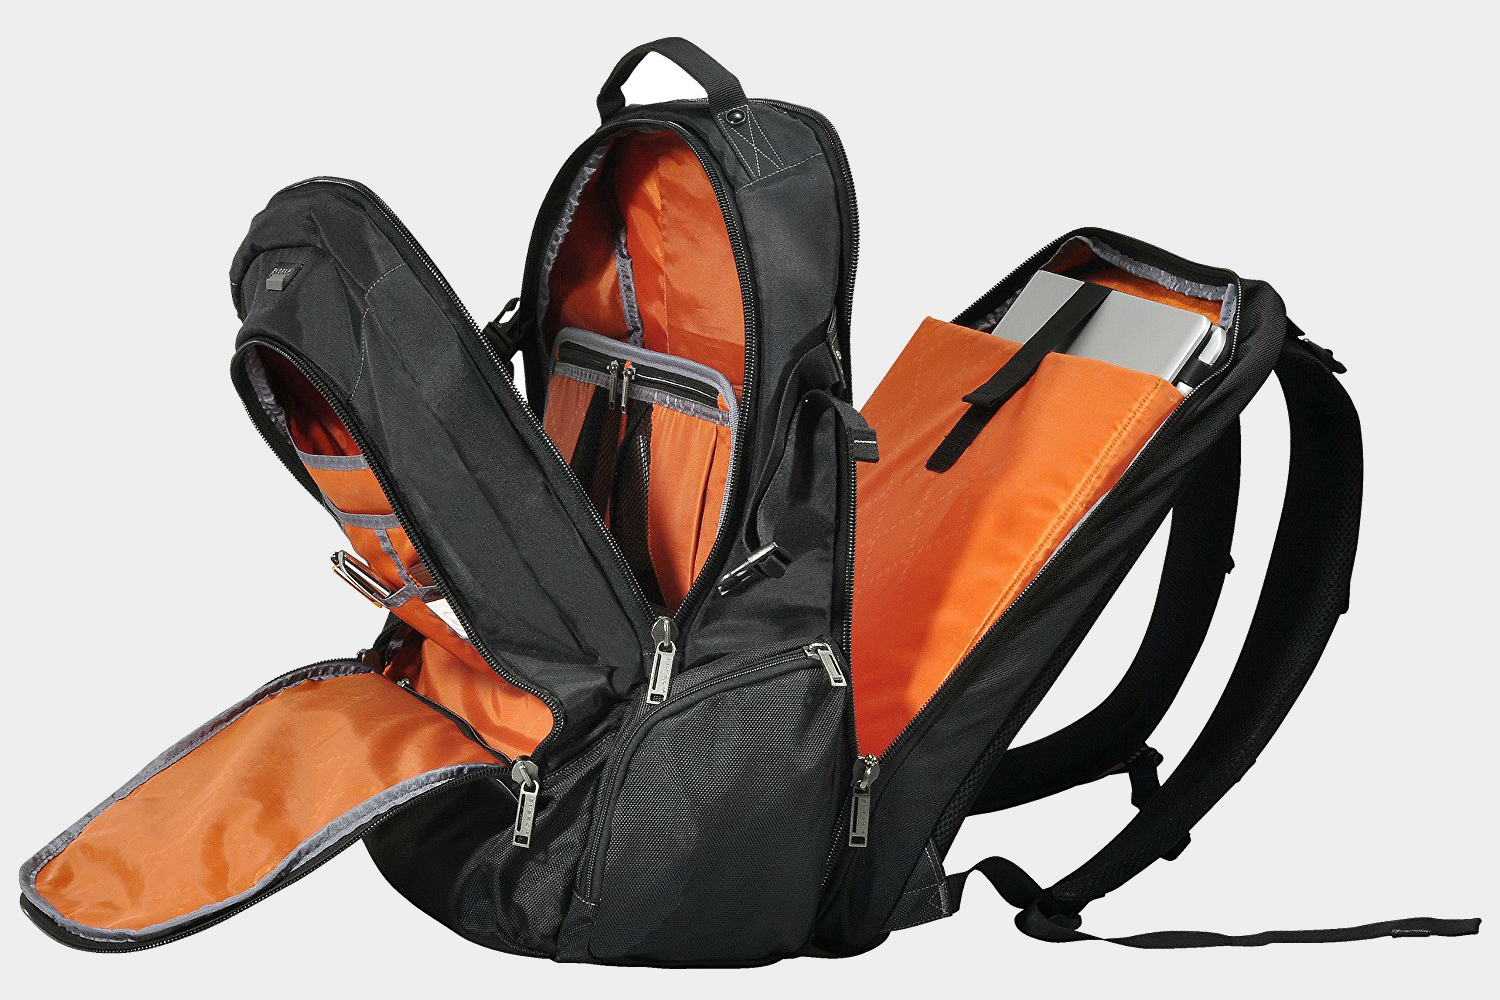 The Everki Titan backpack, opened.